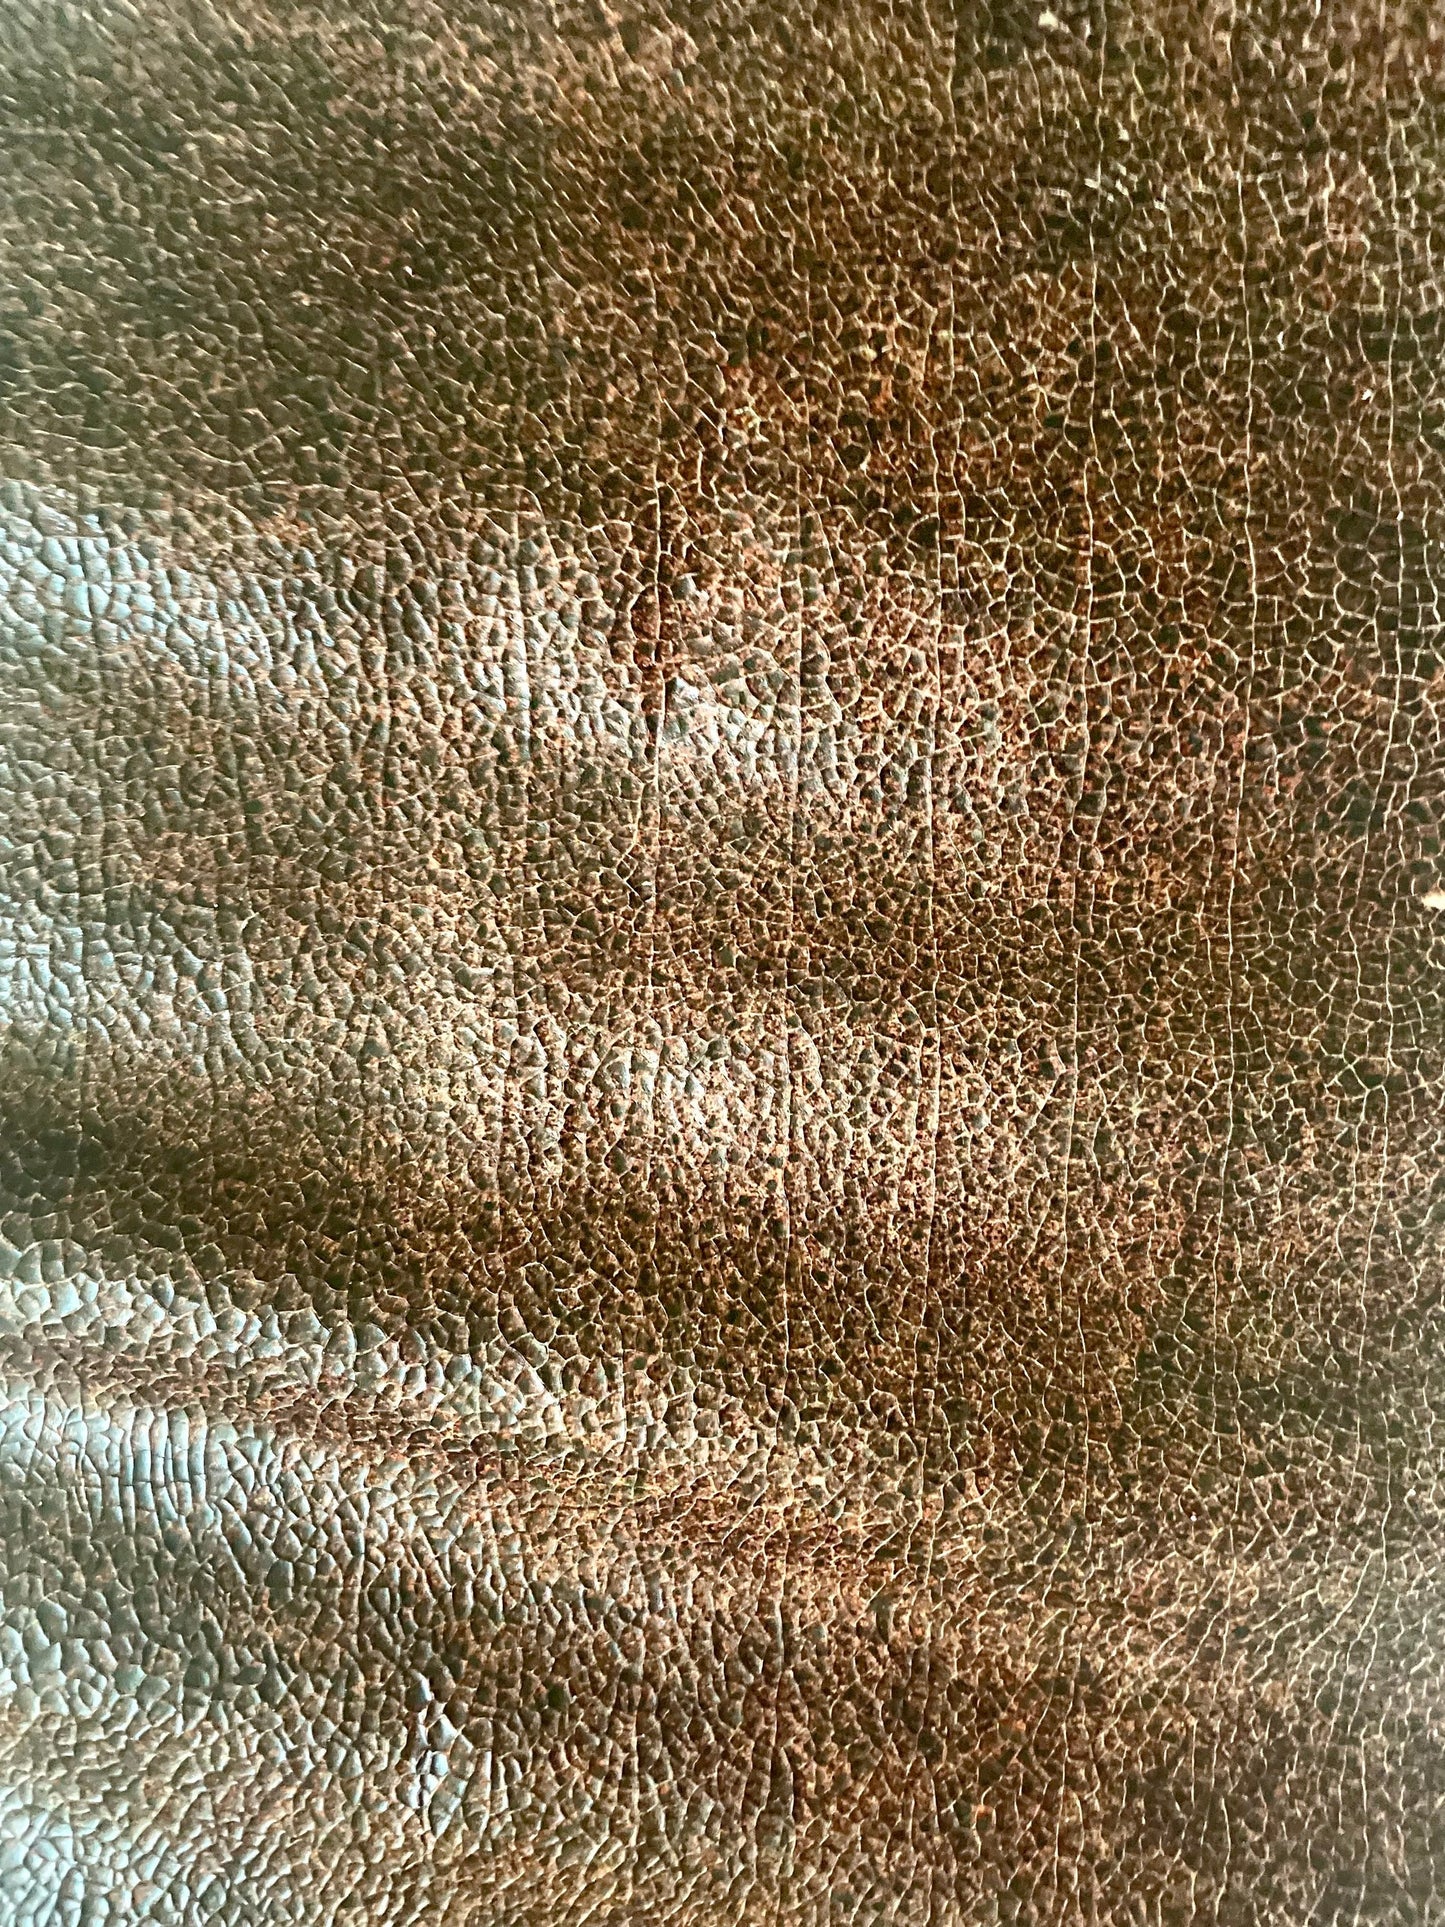 Laser engraved crackle finish leather - Raw Leather - Wholesale Leather 1-2oz